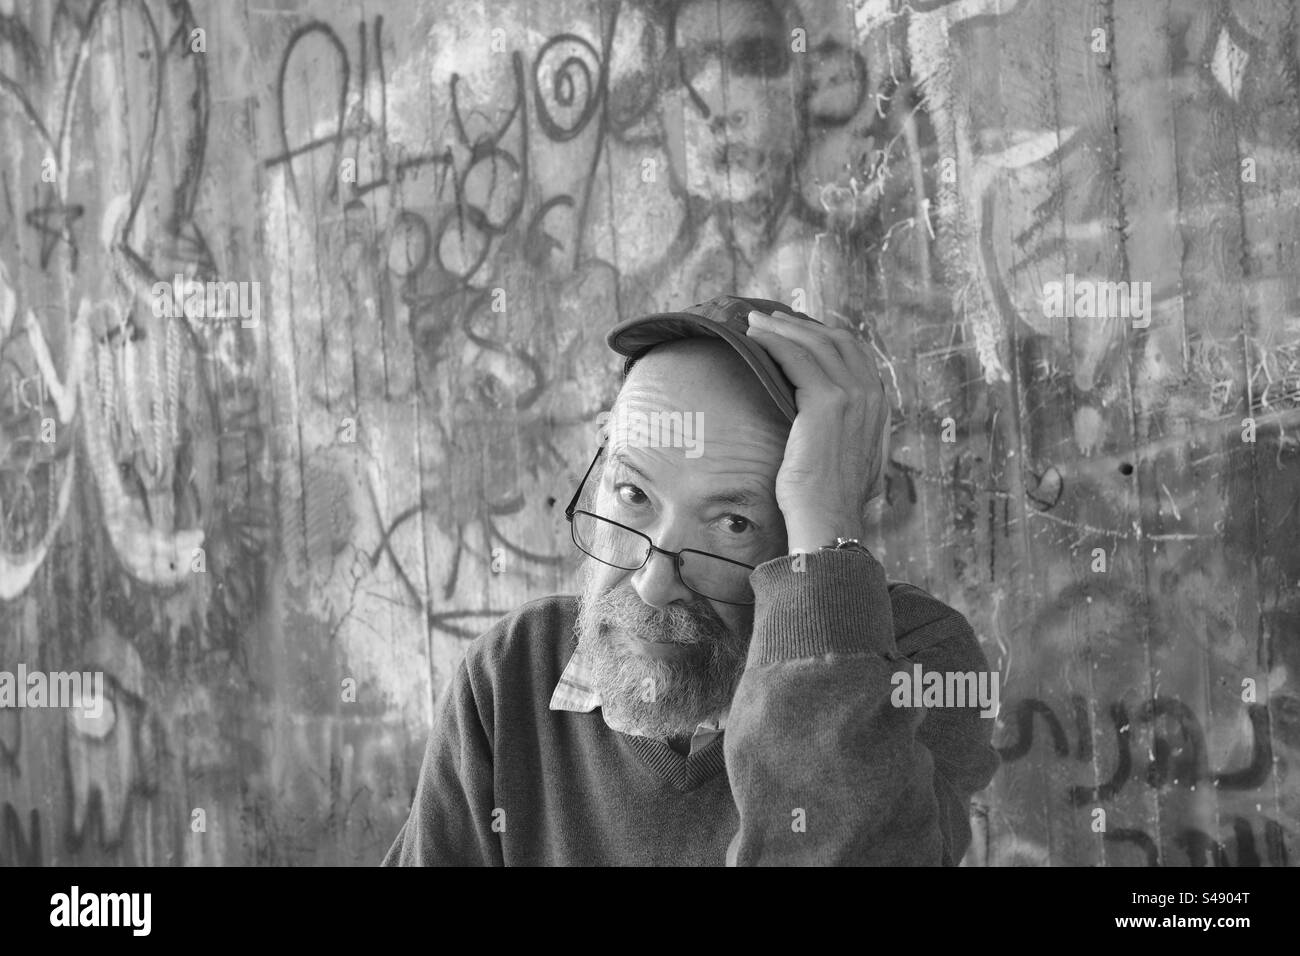 Monochrome Portrait of senior man against graffiti wall Stock Photo